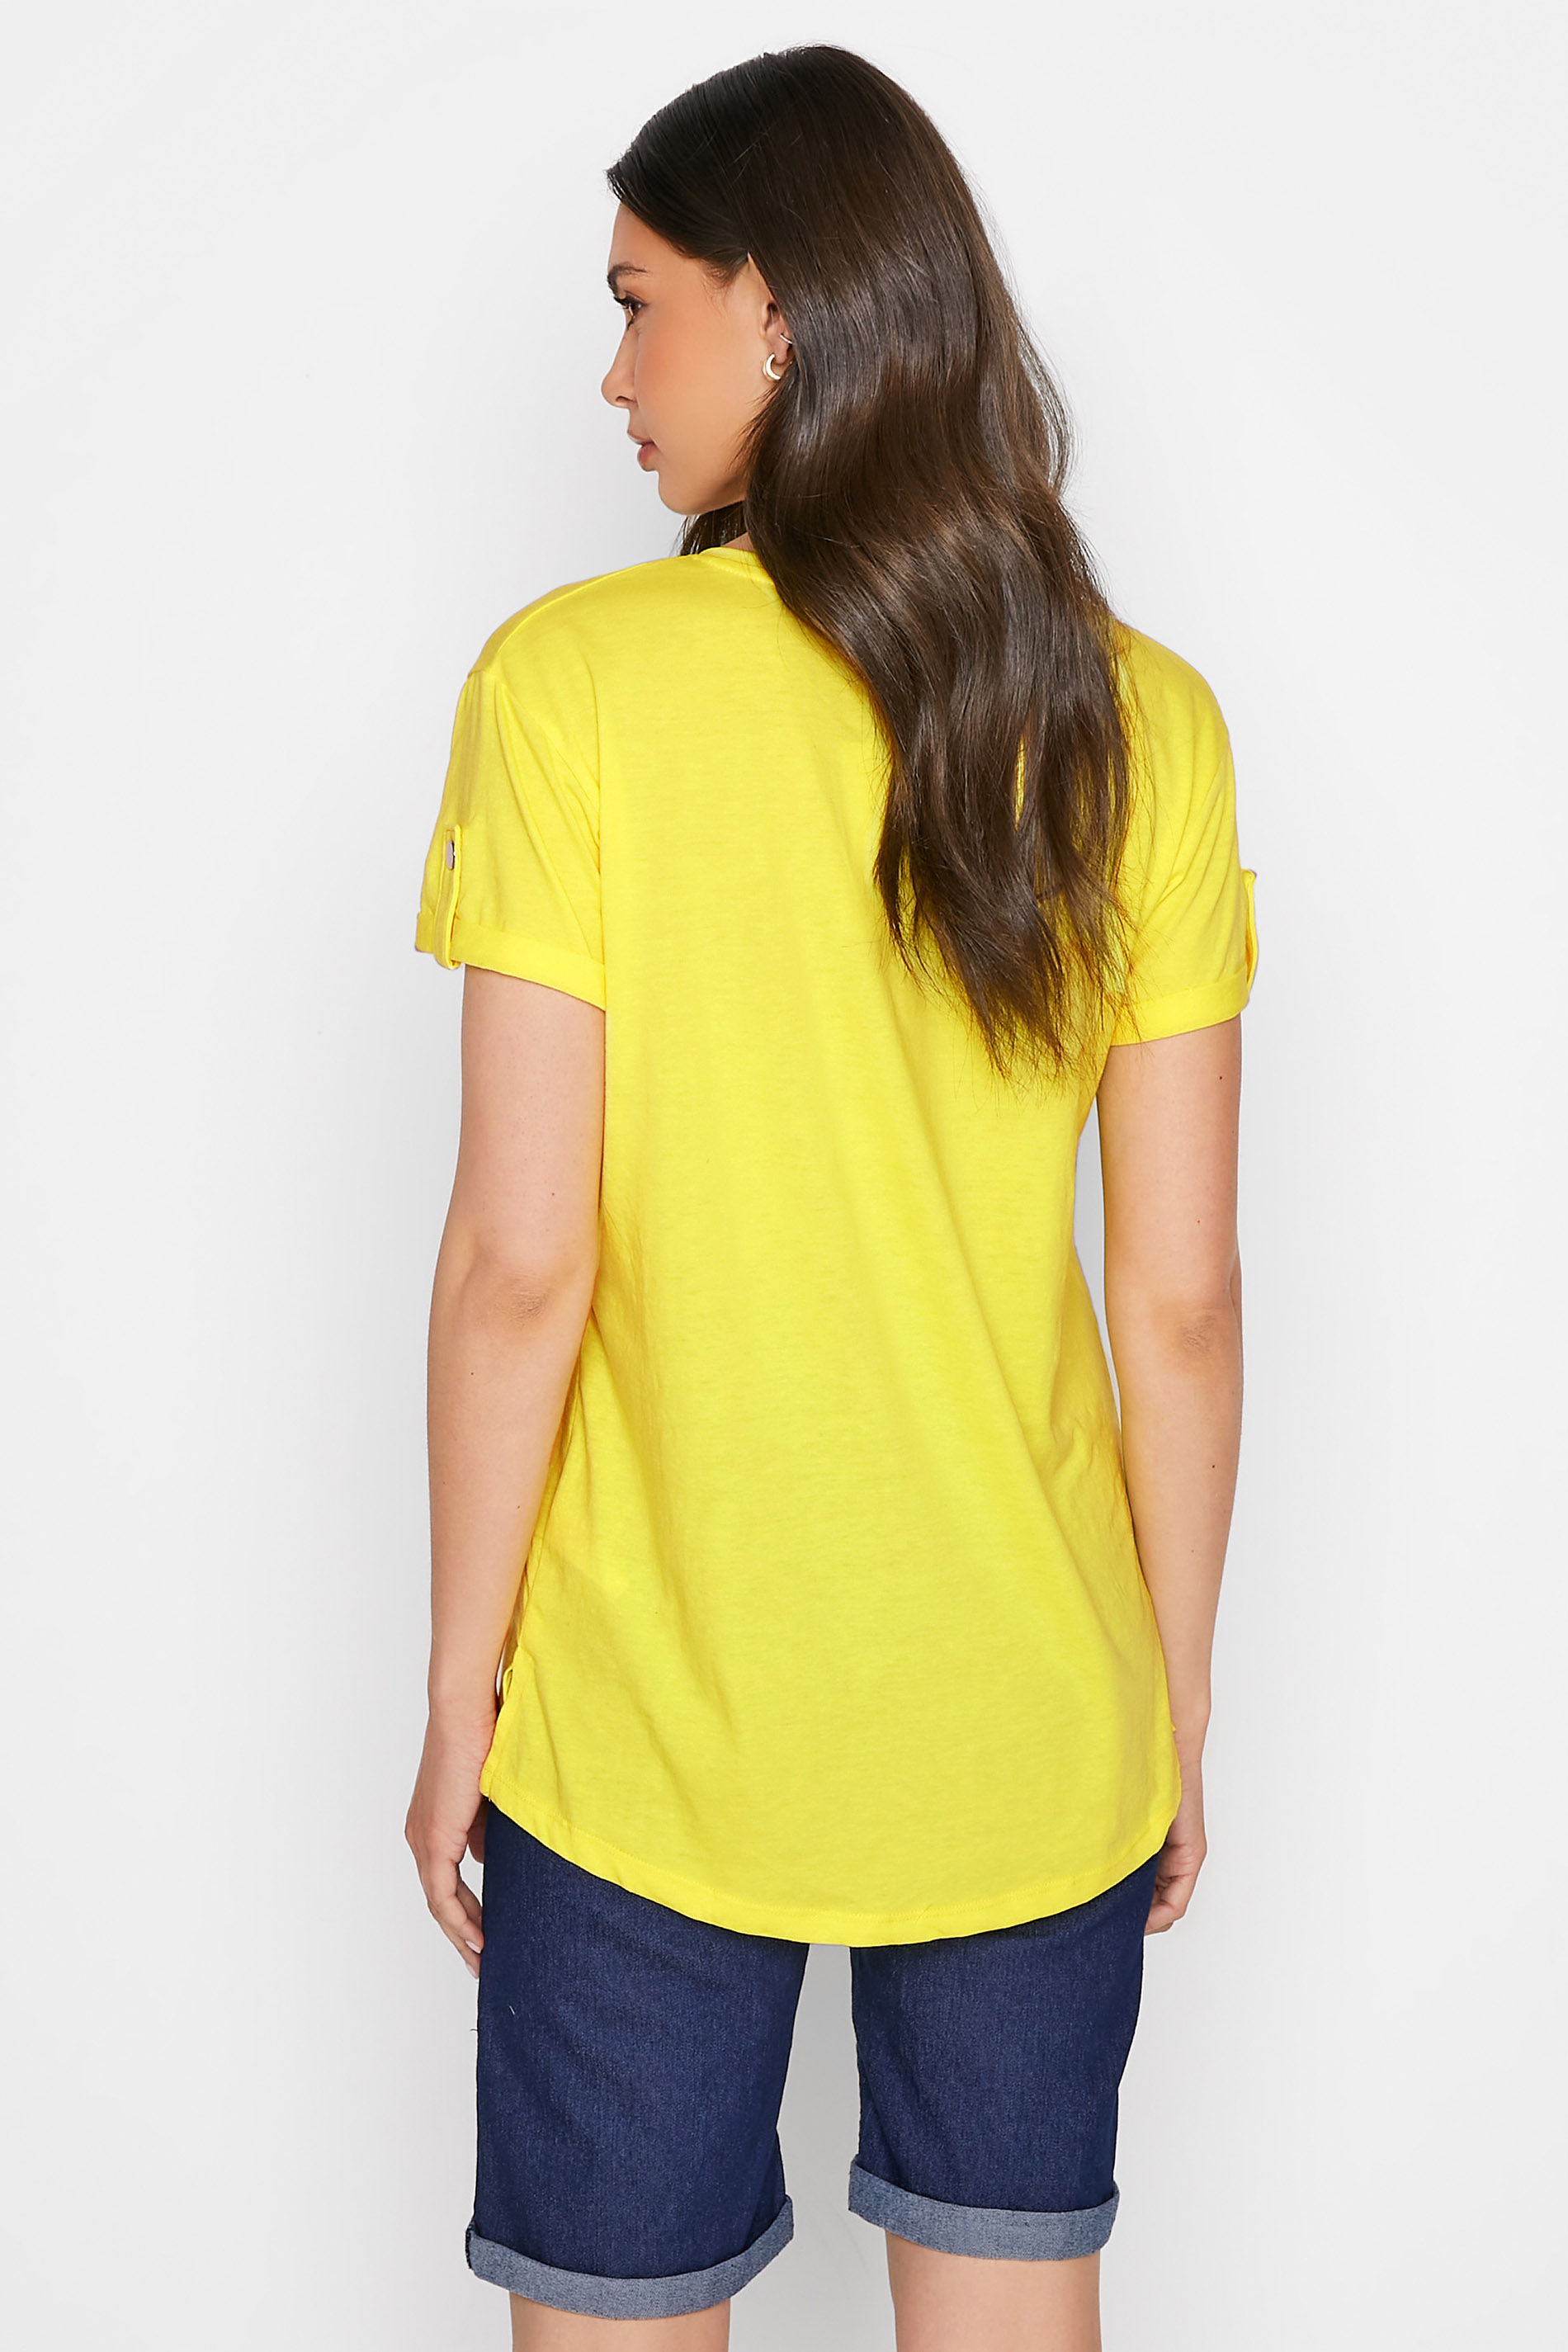 Tall Women's LTS Bright Yellow Short Sleeve Pocket T-Shirt | Long Tall Sally 3